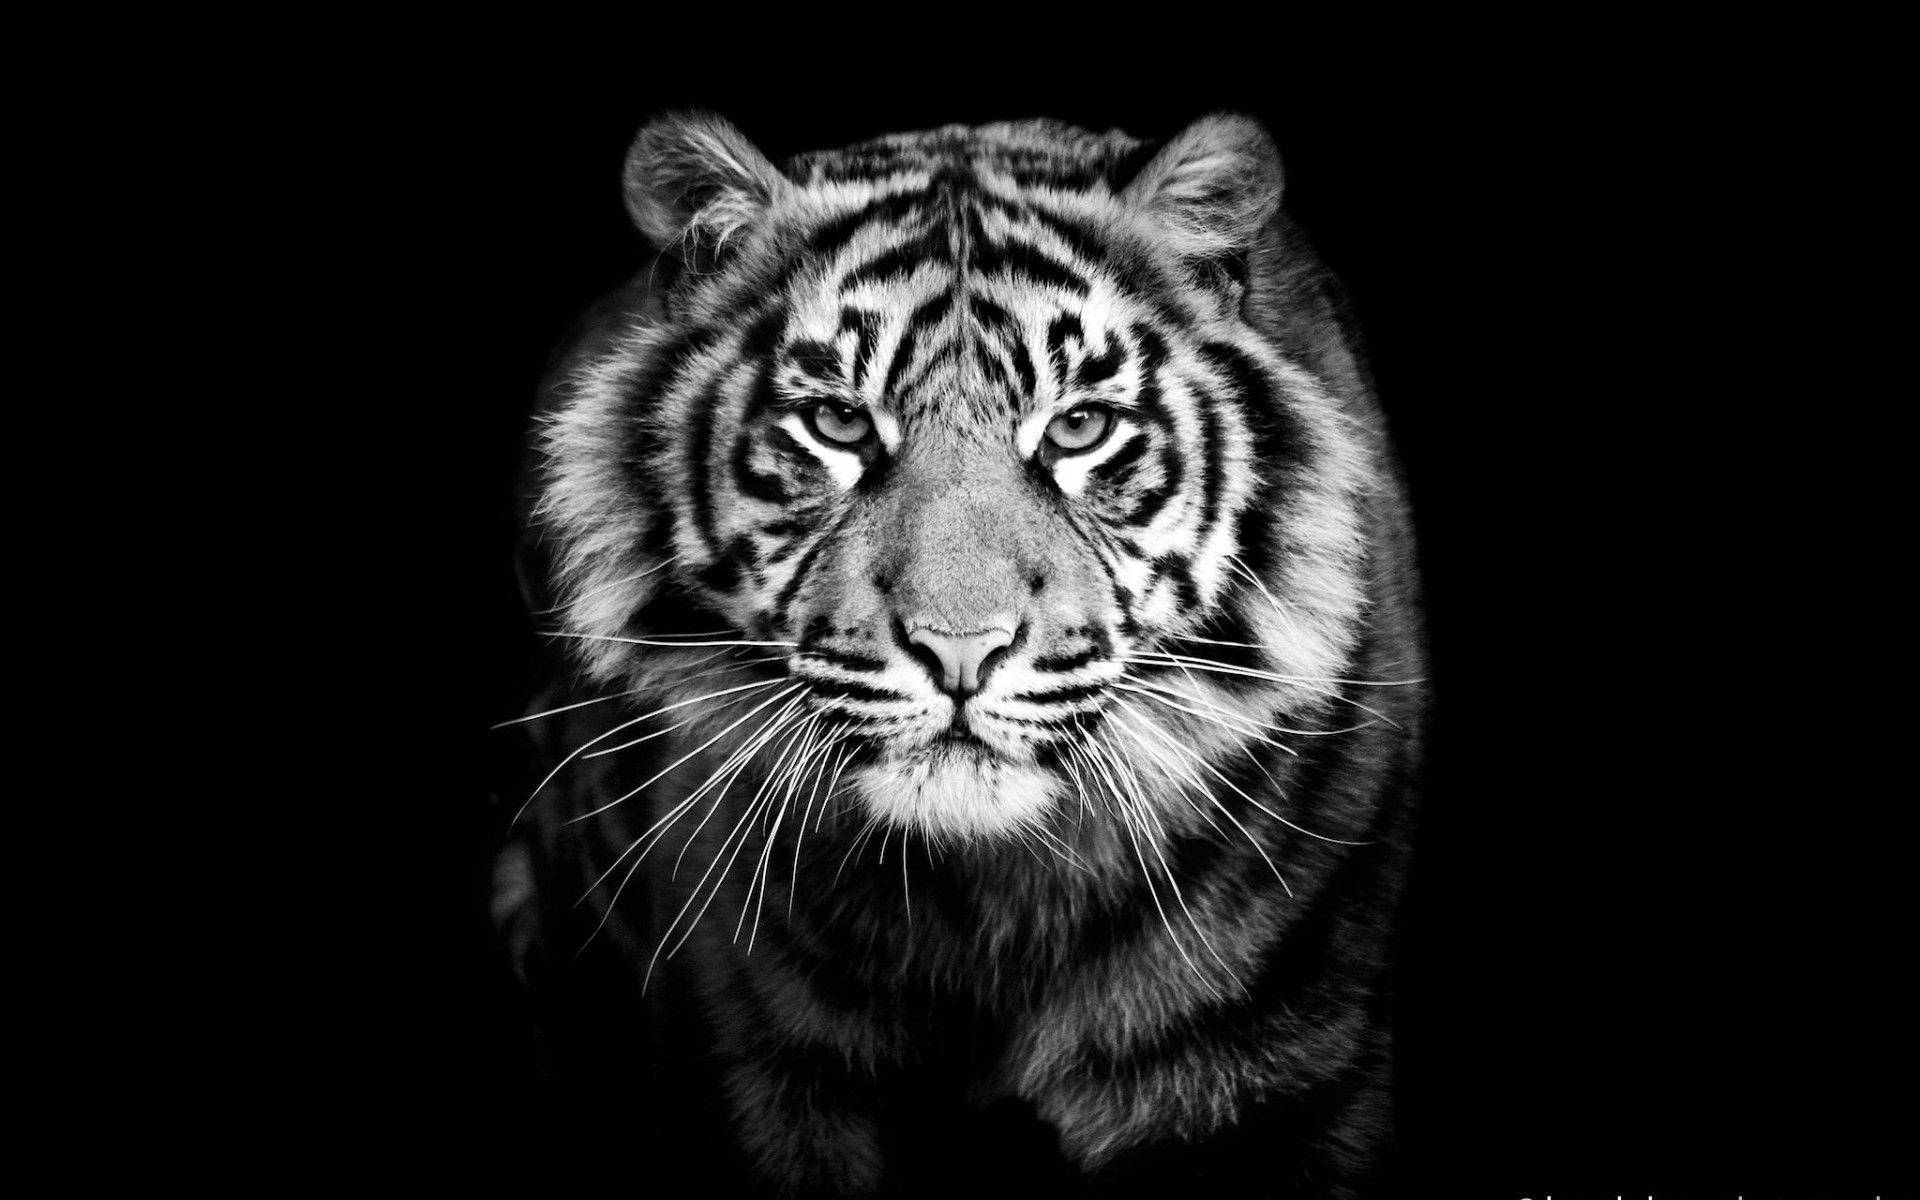 Striking Black and White Tiger Portrait Wallpaper